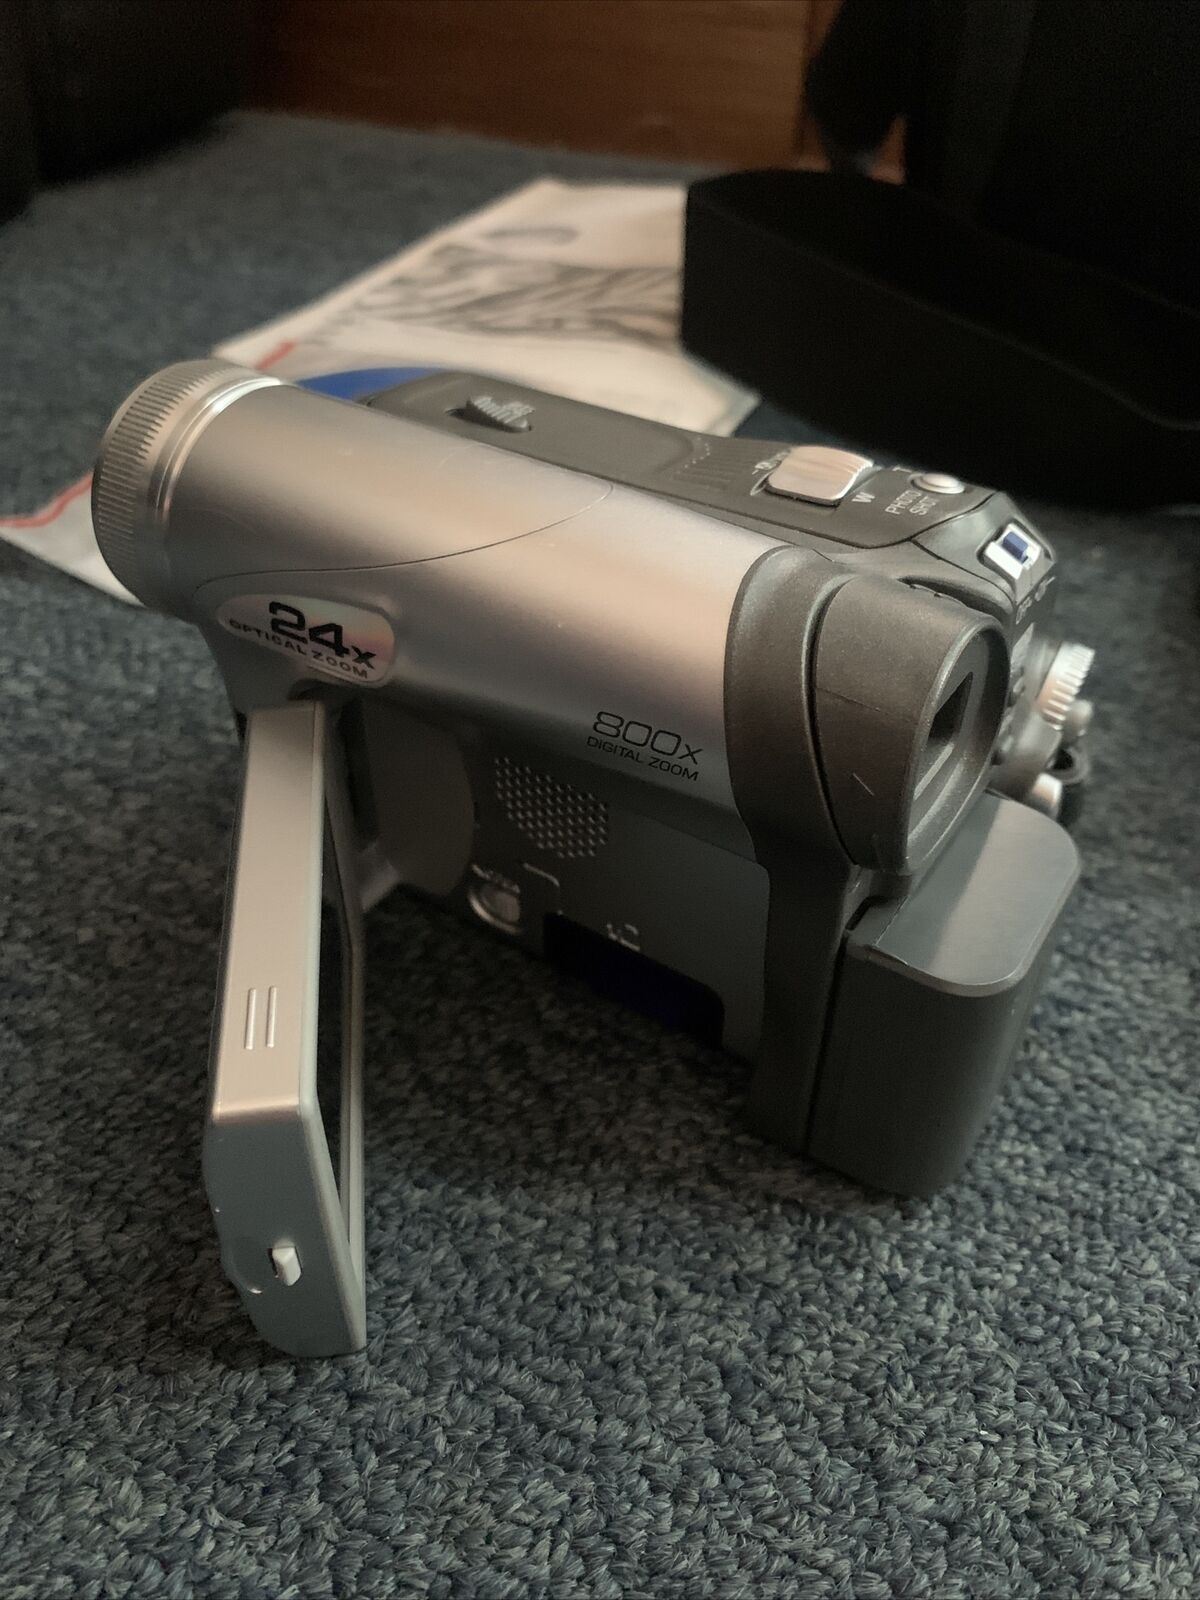 Panasonic NV-GS25 MiniDV Tape Video Camera with Charger, Cassette, Battery & Bag